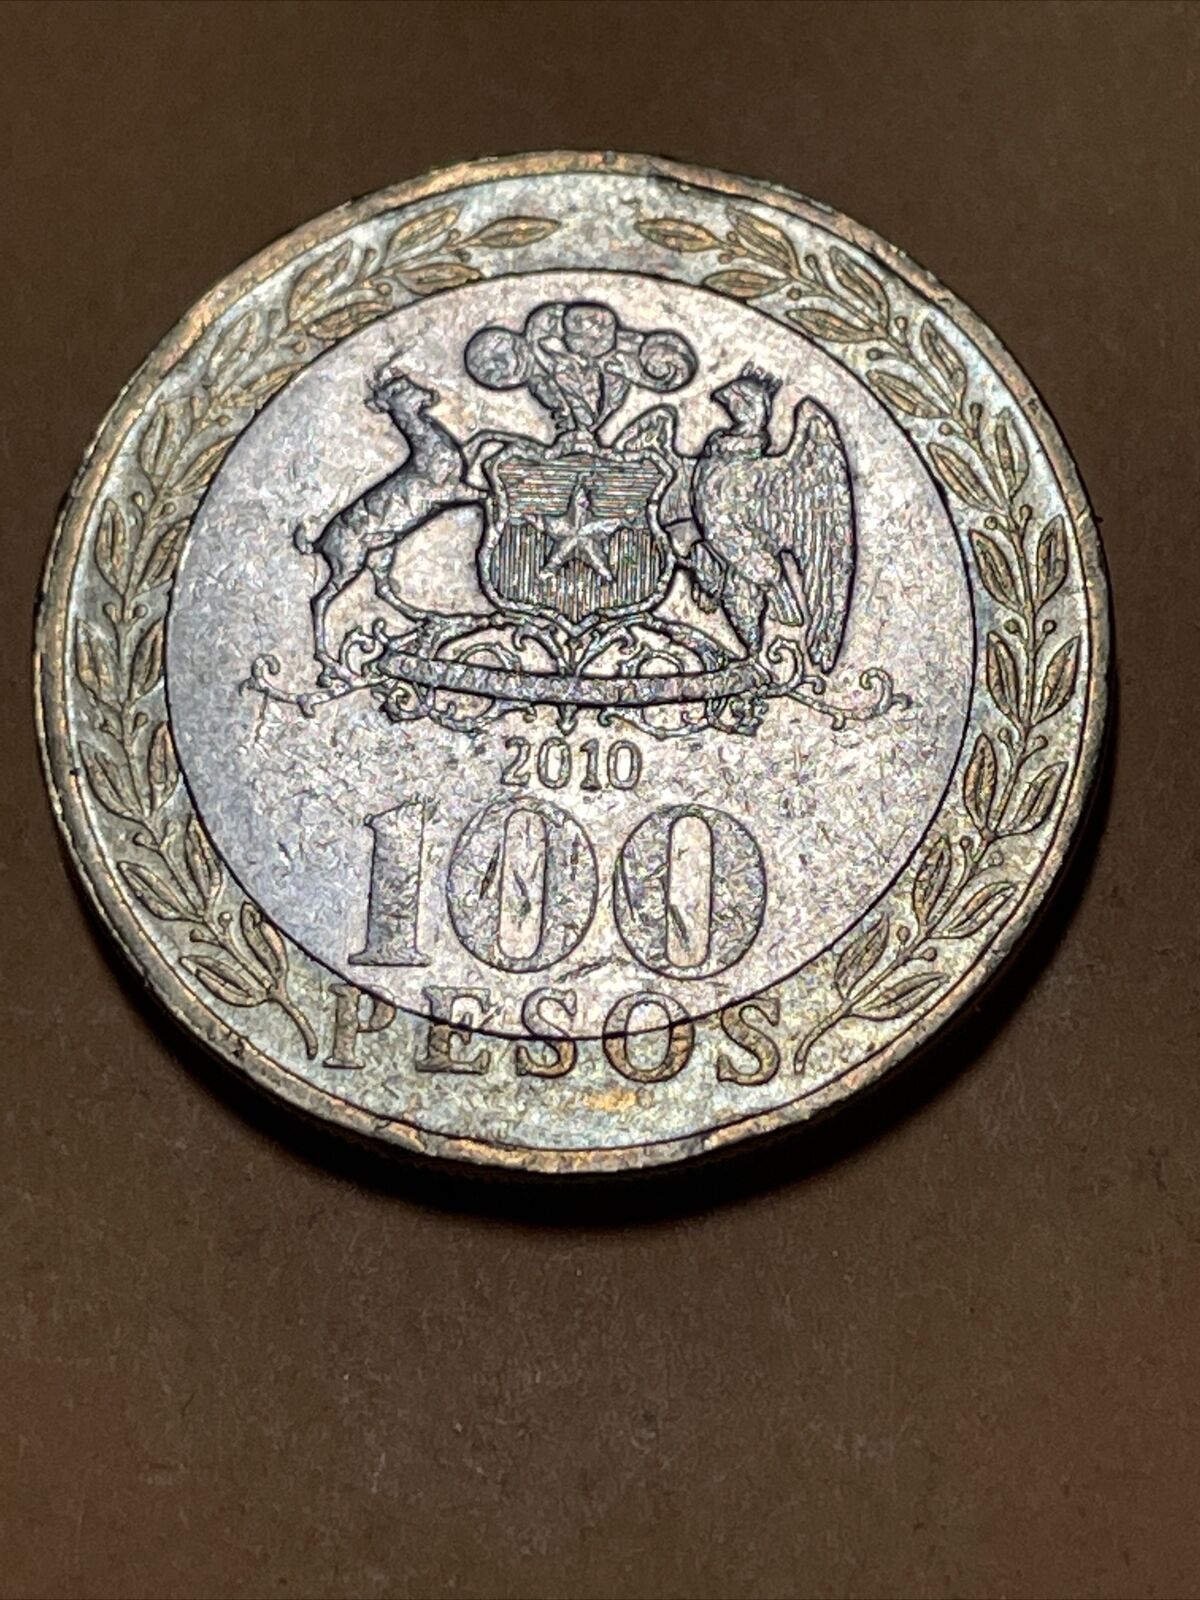 Chile 100 Pesos Current Circulated Bimetallic Coin - Dated 2010